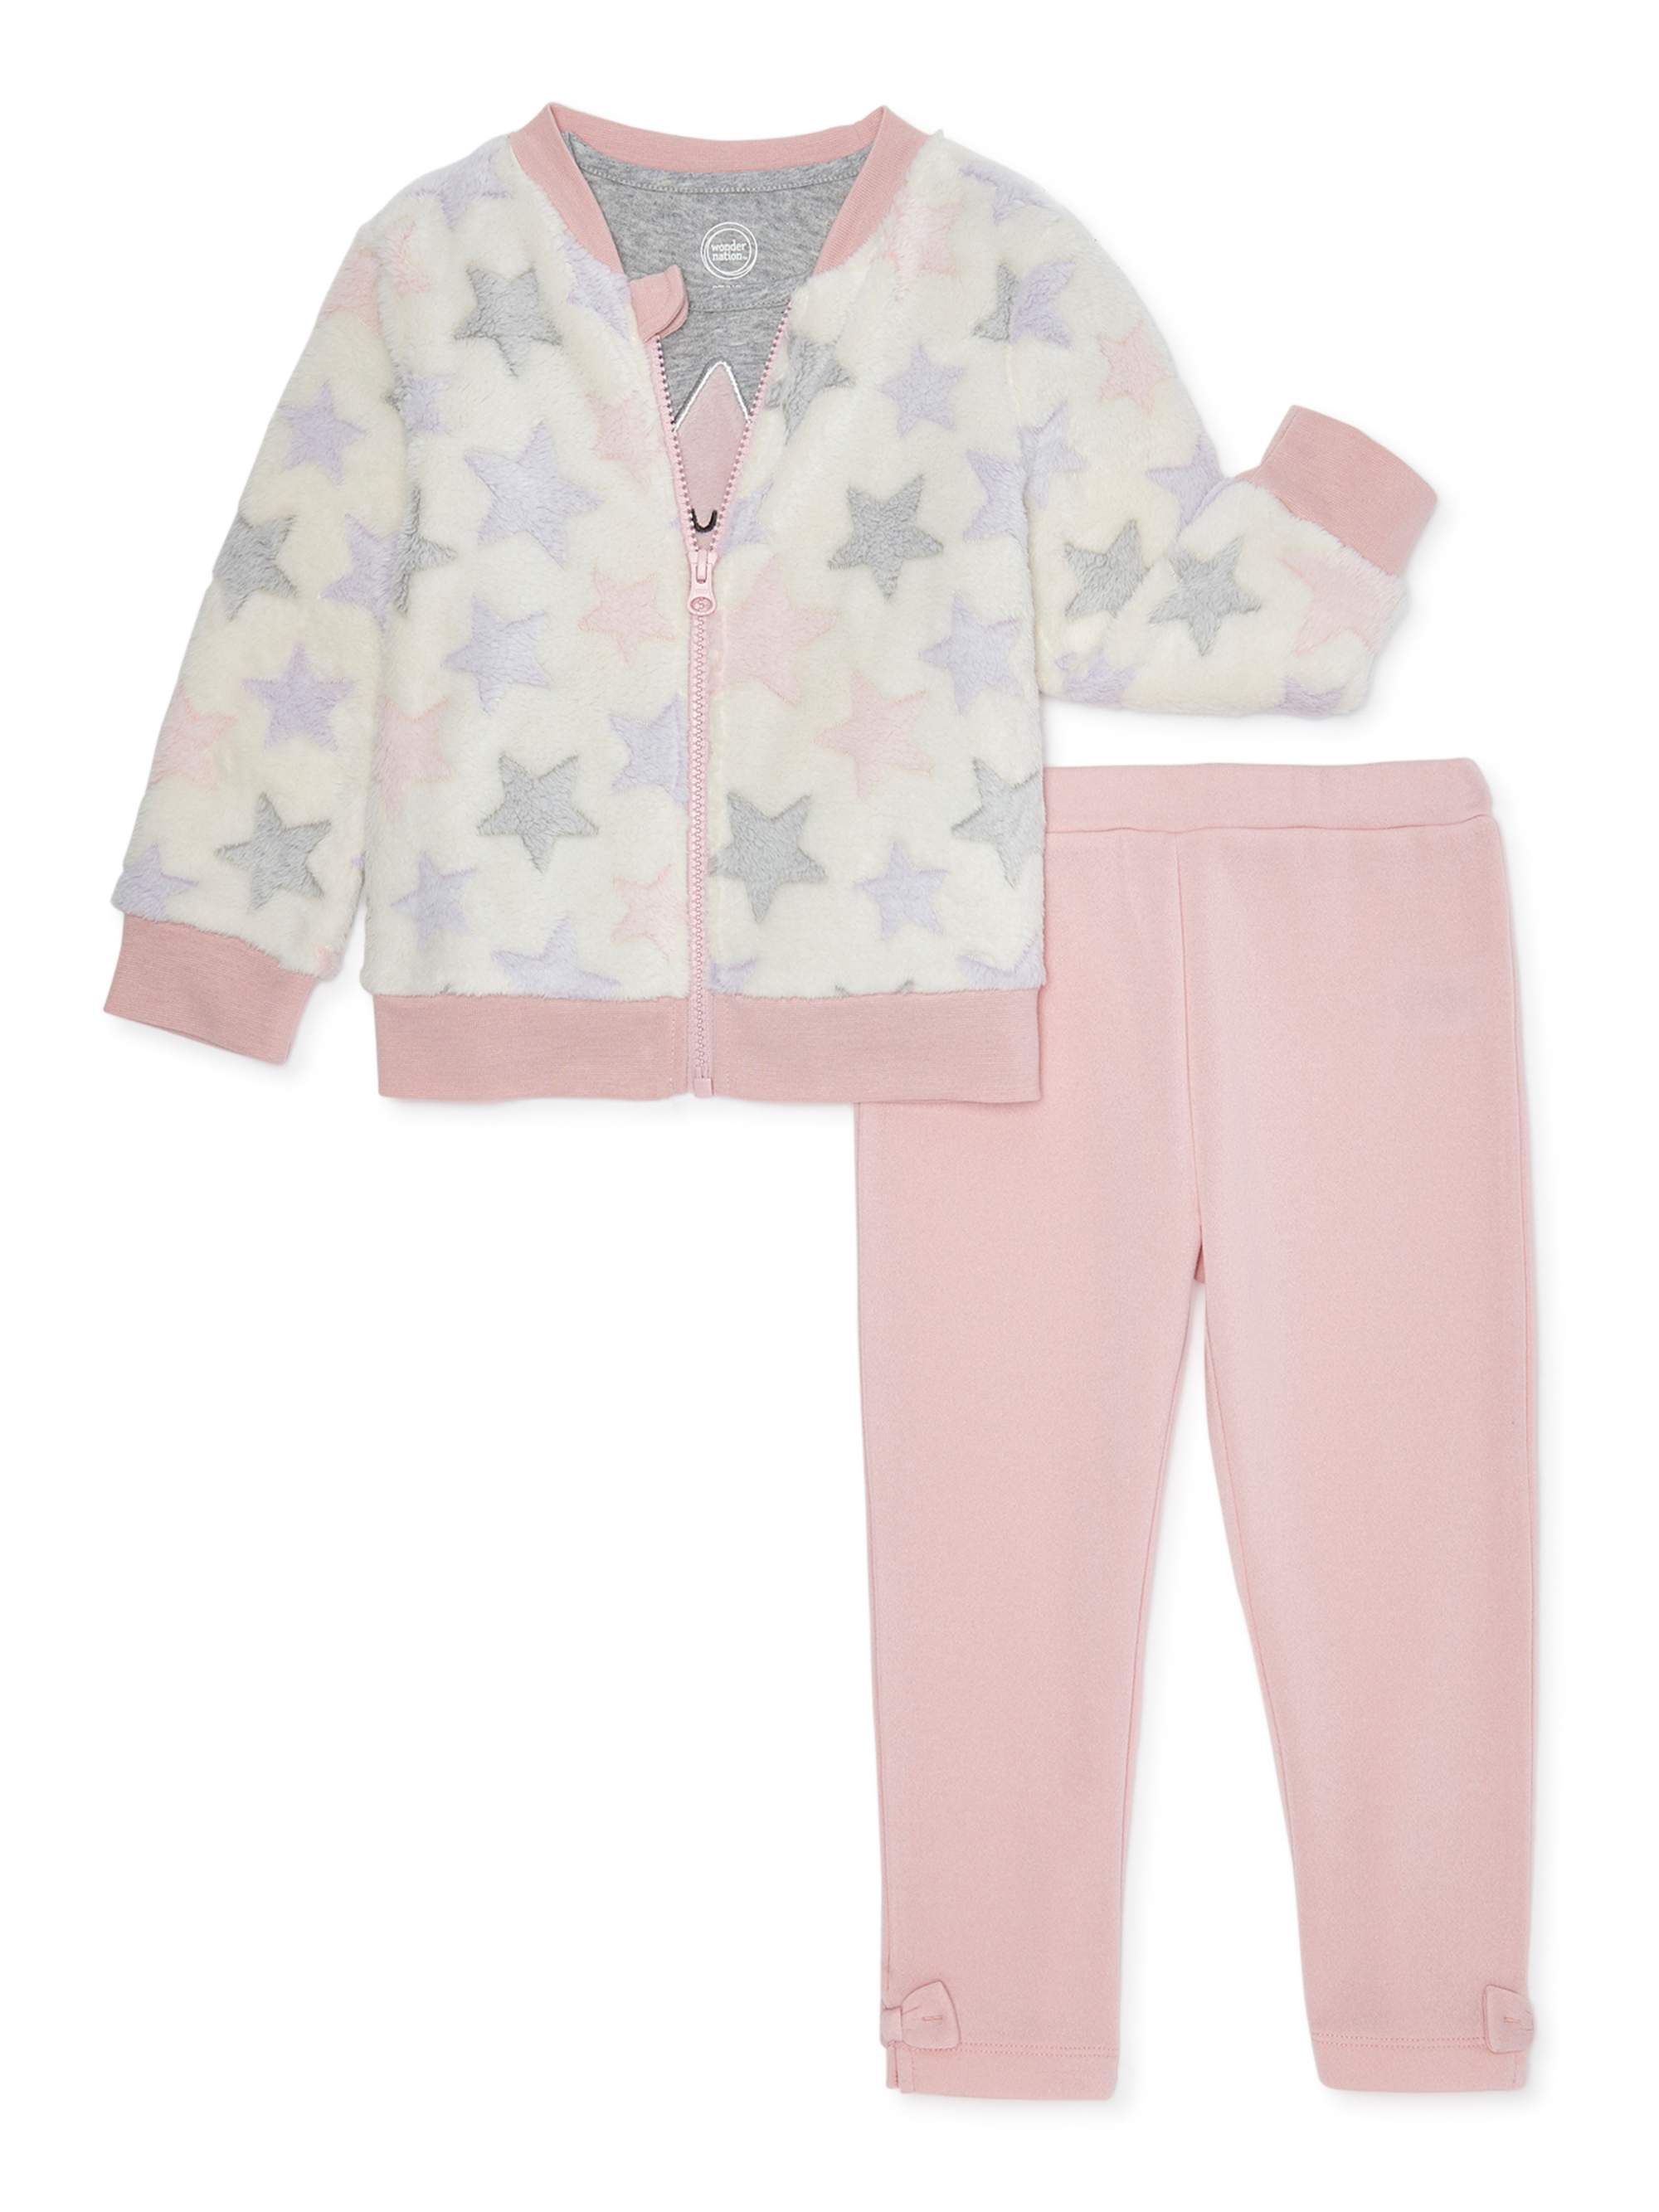 Wonder Nation Toddler Girl Minky Jacket, T-shirt & Pants, 3pc Outfit Set (2T-5T) - image 1 of 5